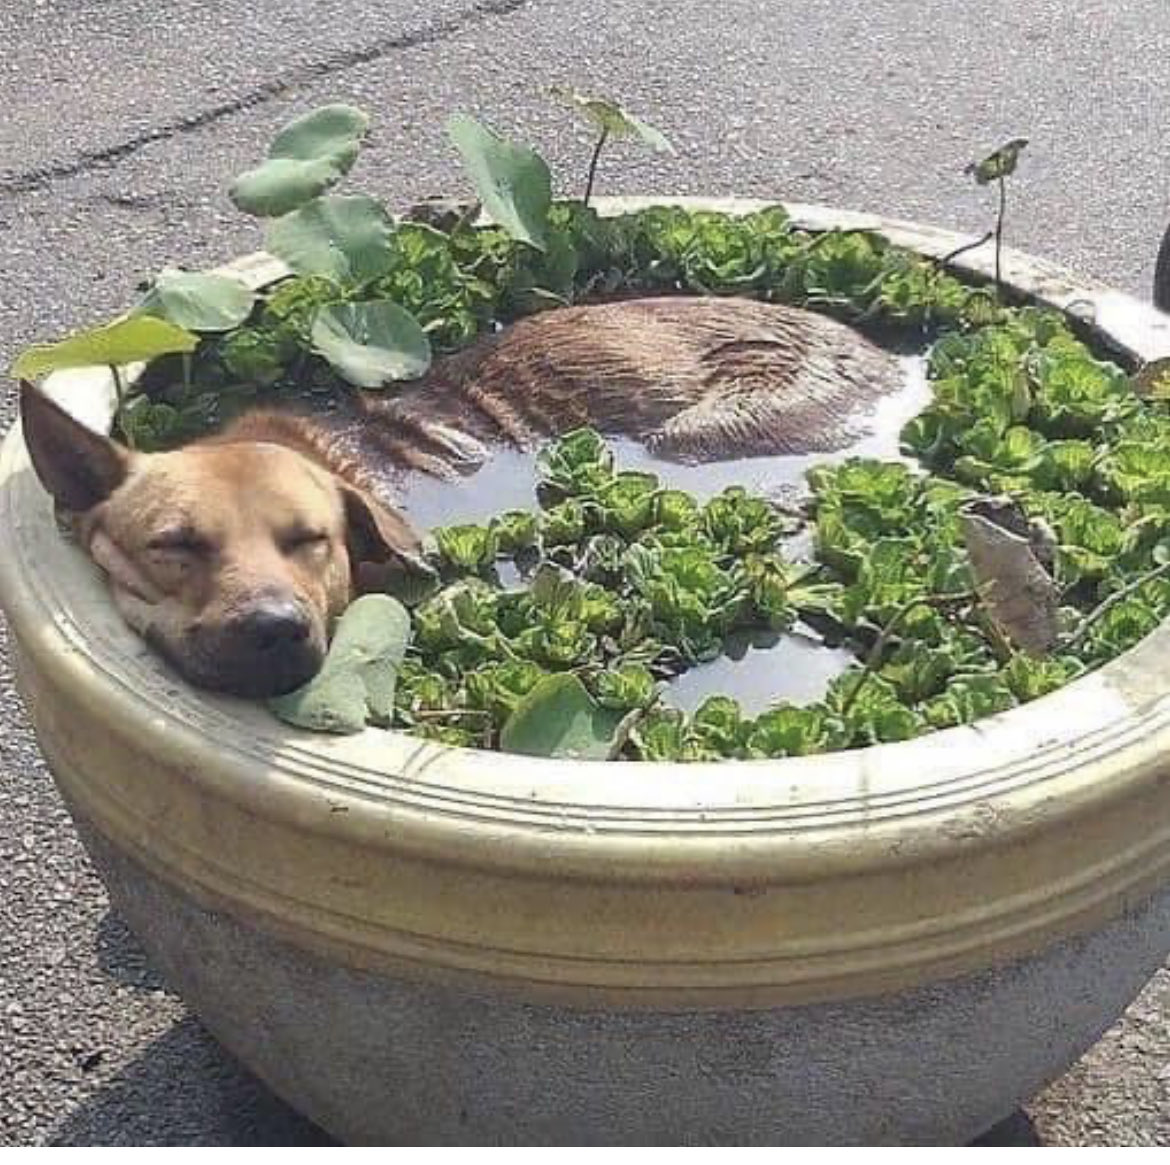 It’s another hot day for dogs ! #sunshine #heatwave #gardening #pondlife #gardenersworld